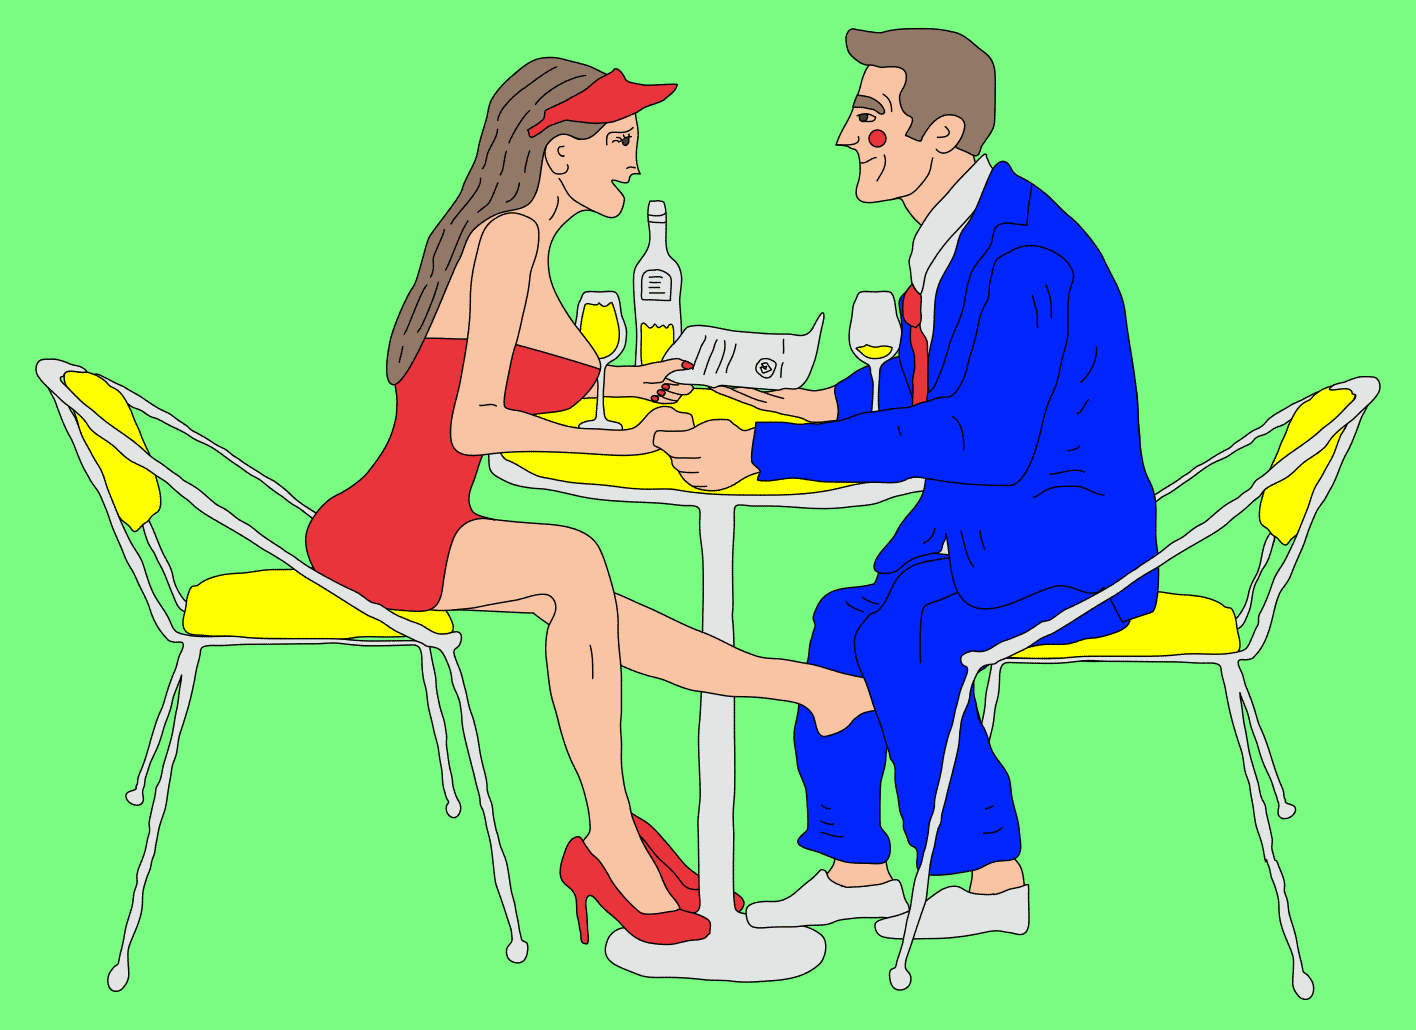 first date